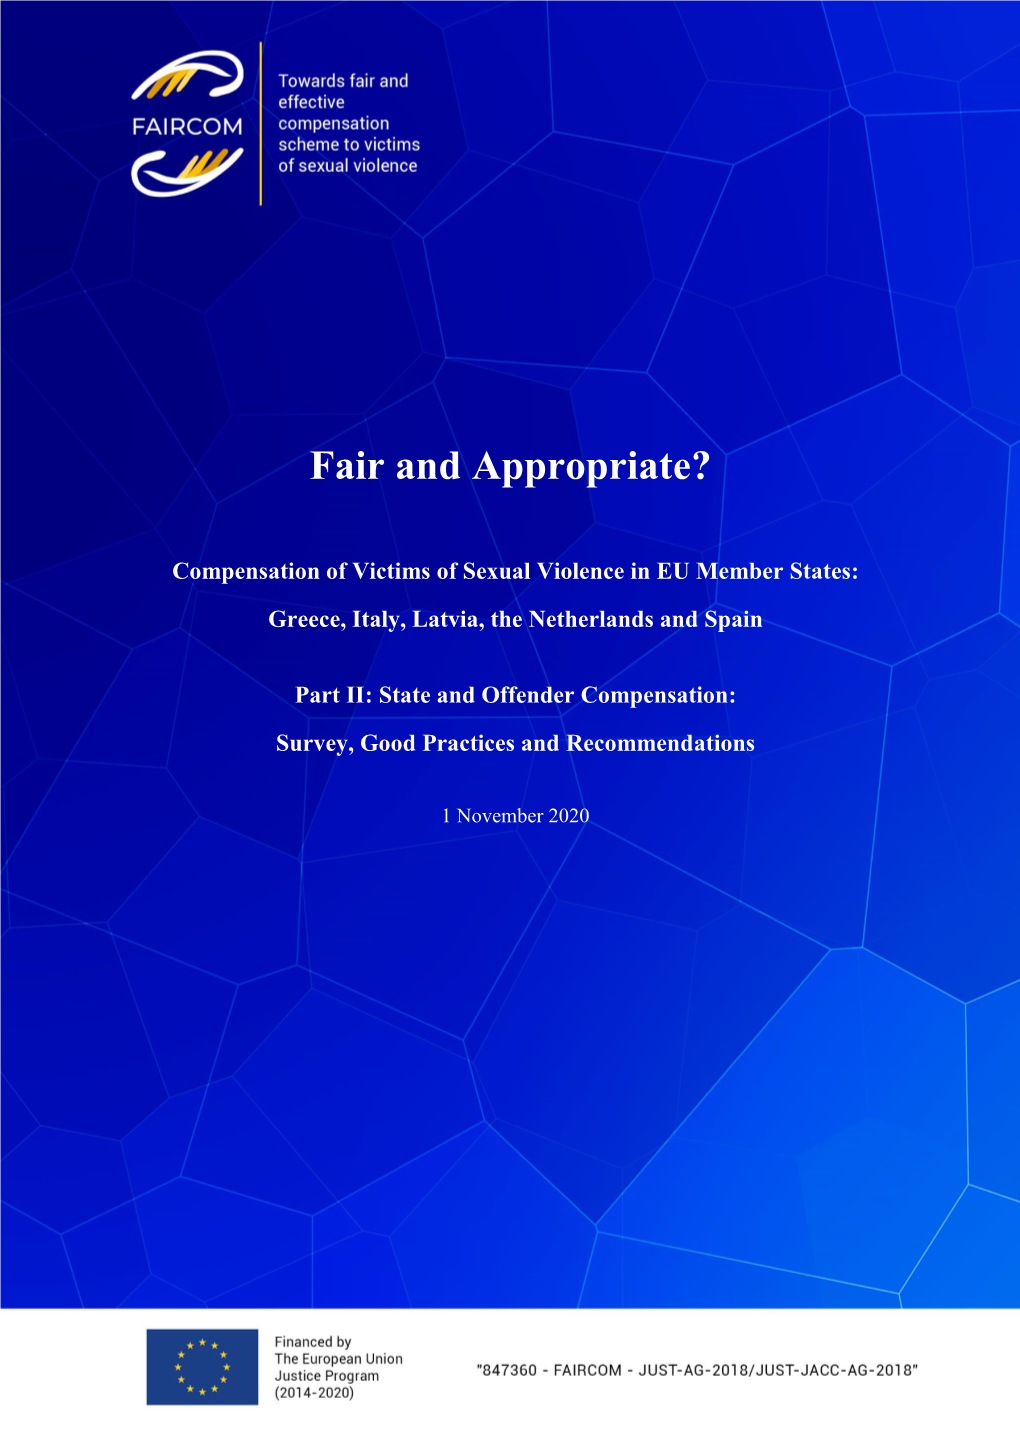 Fair and Appropriate? FAIRCOM Report Part II